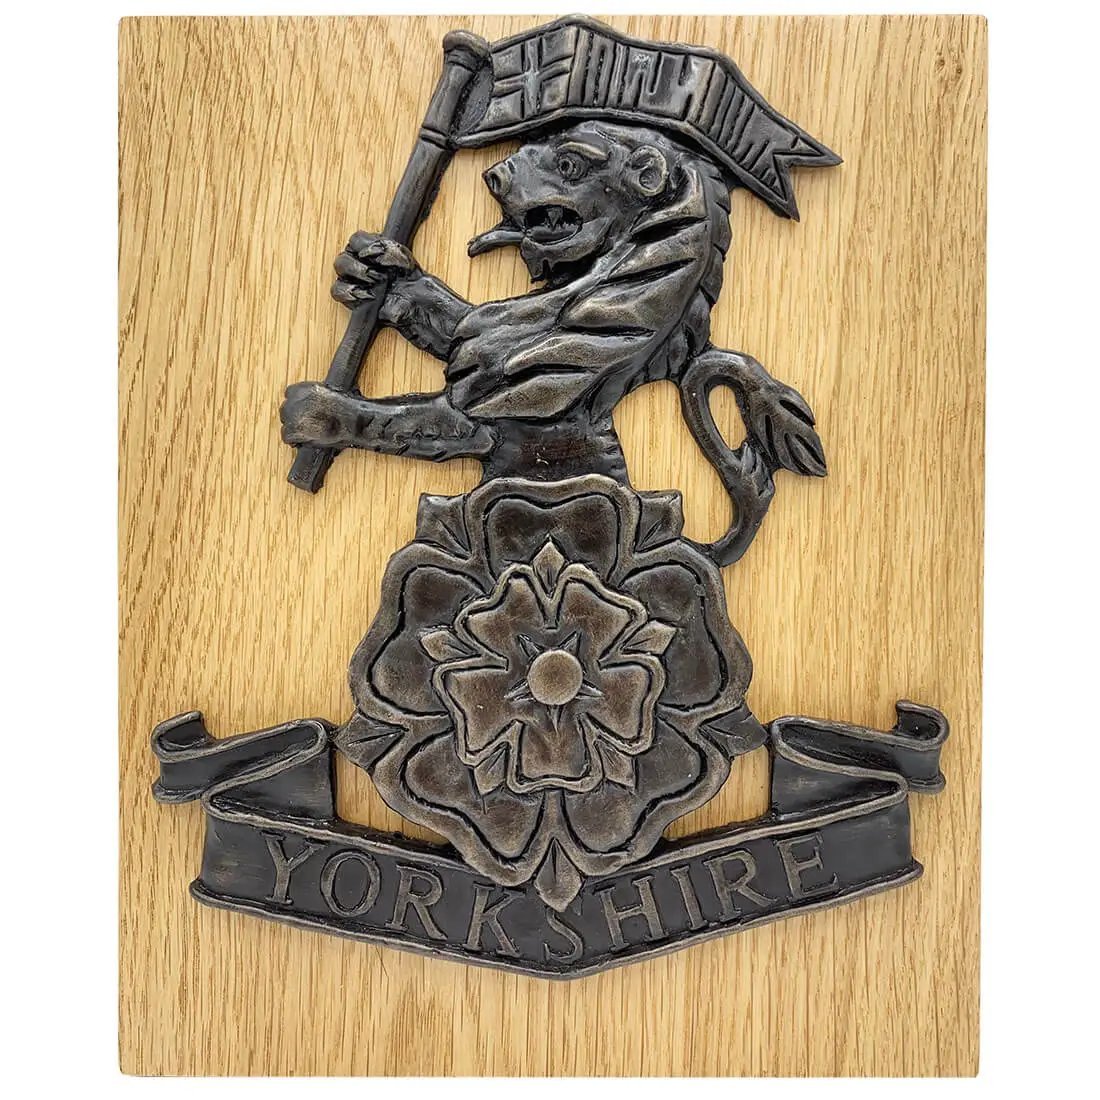 The Yorkshire Regiment Regimental Plaque - John Bull Clothing